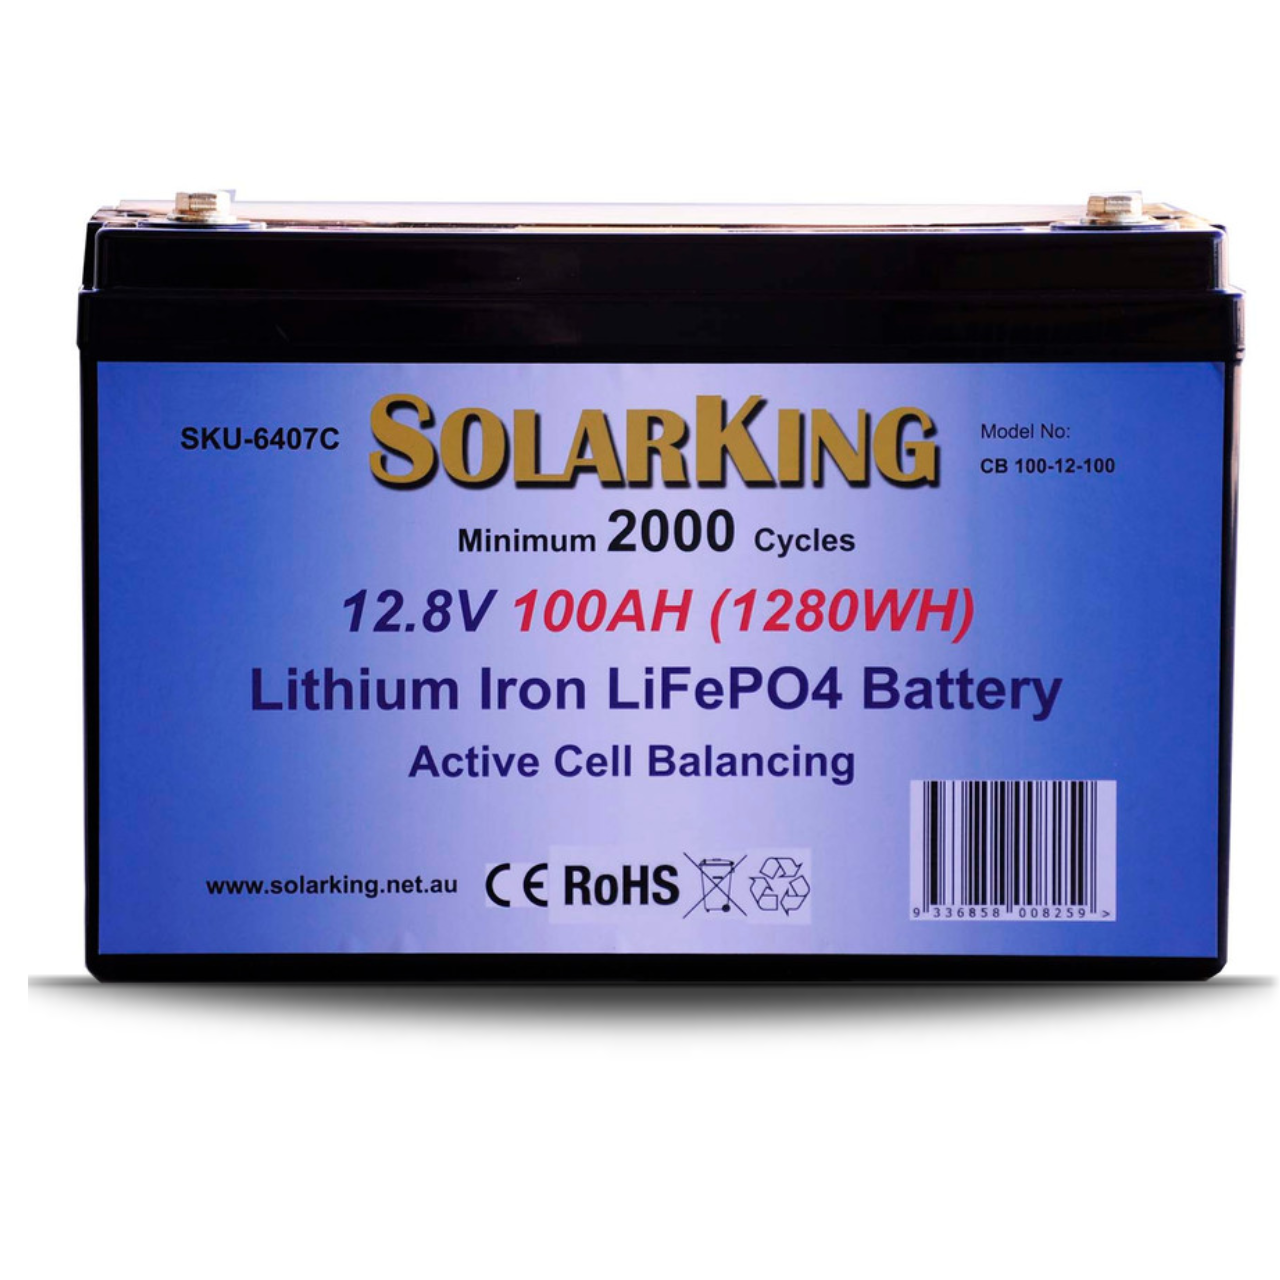 100AH Lithium Iron SolarKing Battery CB-100-12-100